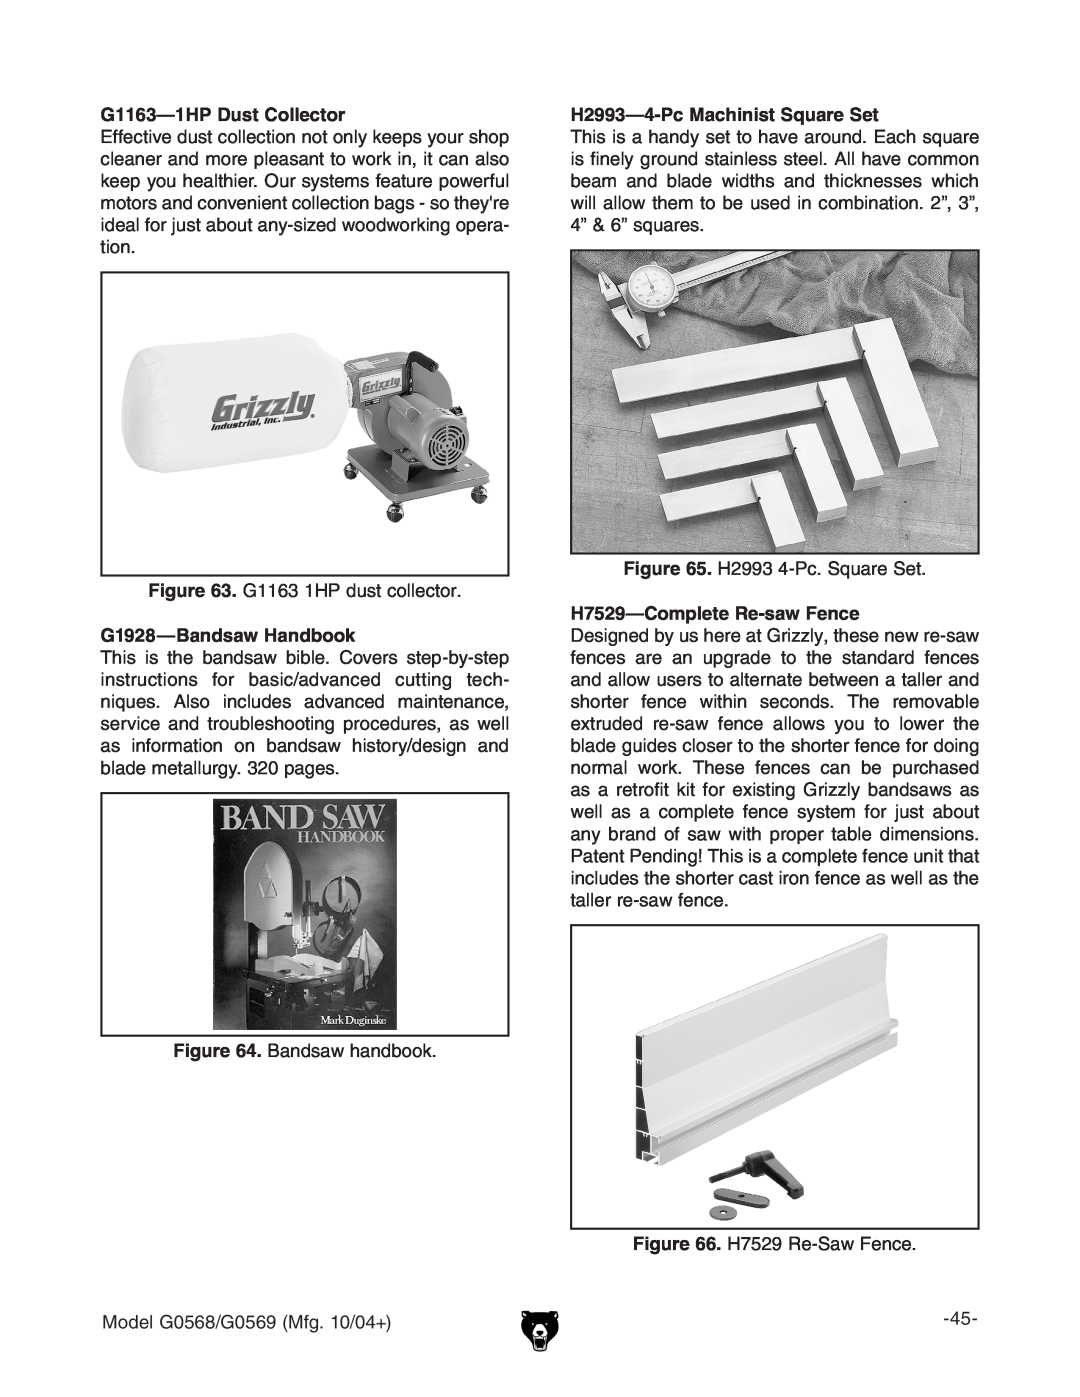 Grizzly G0568 G1163-1HP Dust Collector, &&+&=EYjhiXdaaZXidg#, G1928-Bandsaw Handbook, H2993-4-Pc Machinist Square Set 